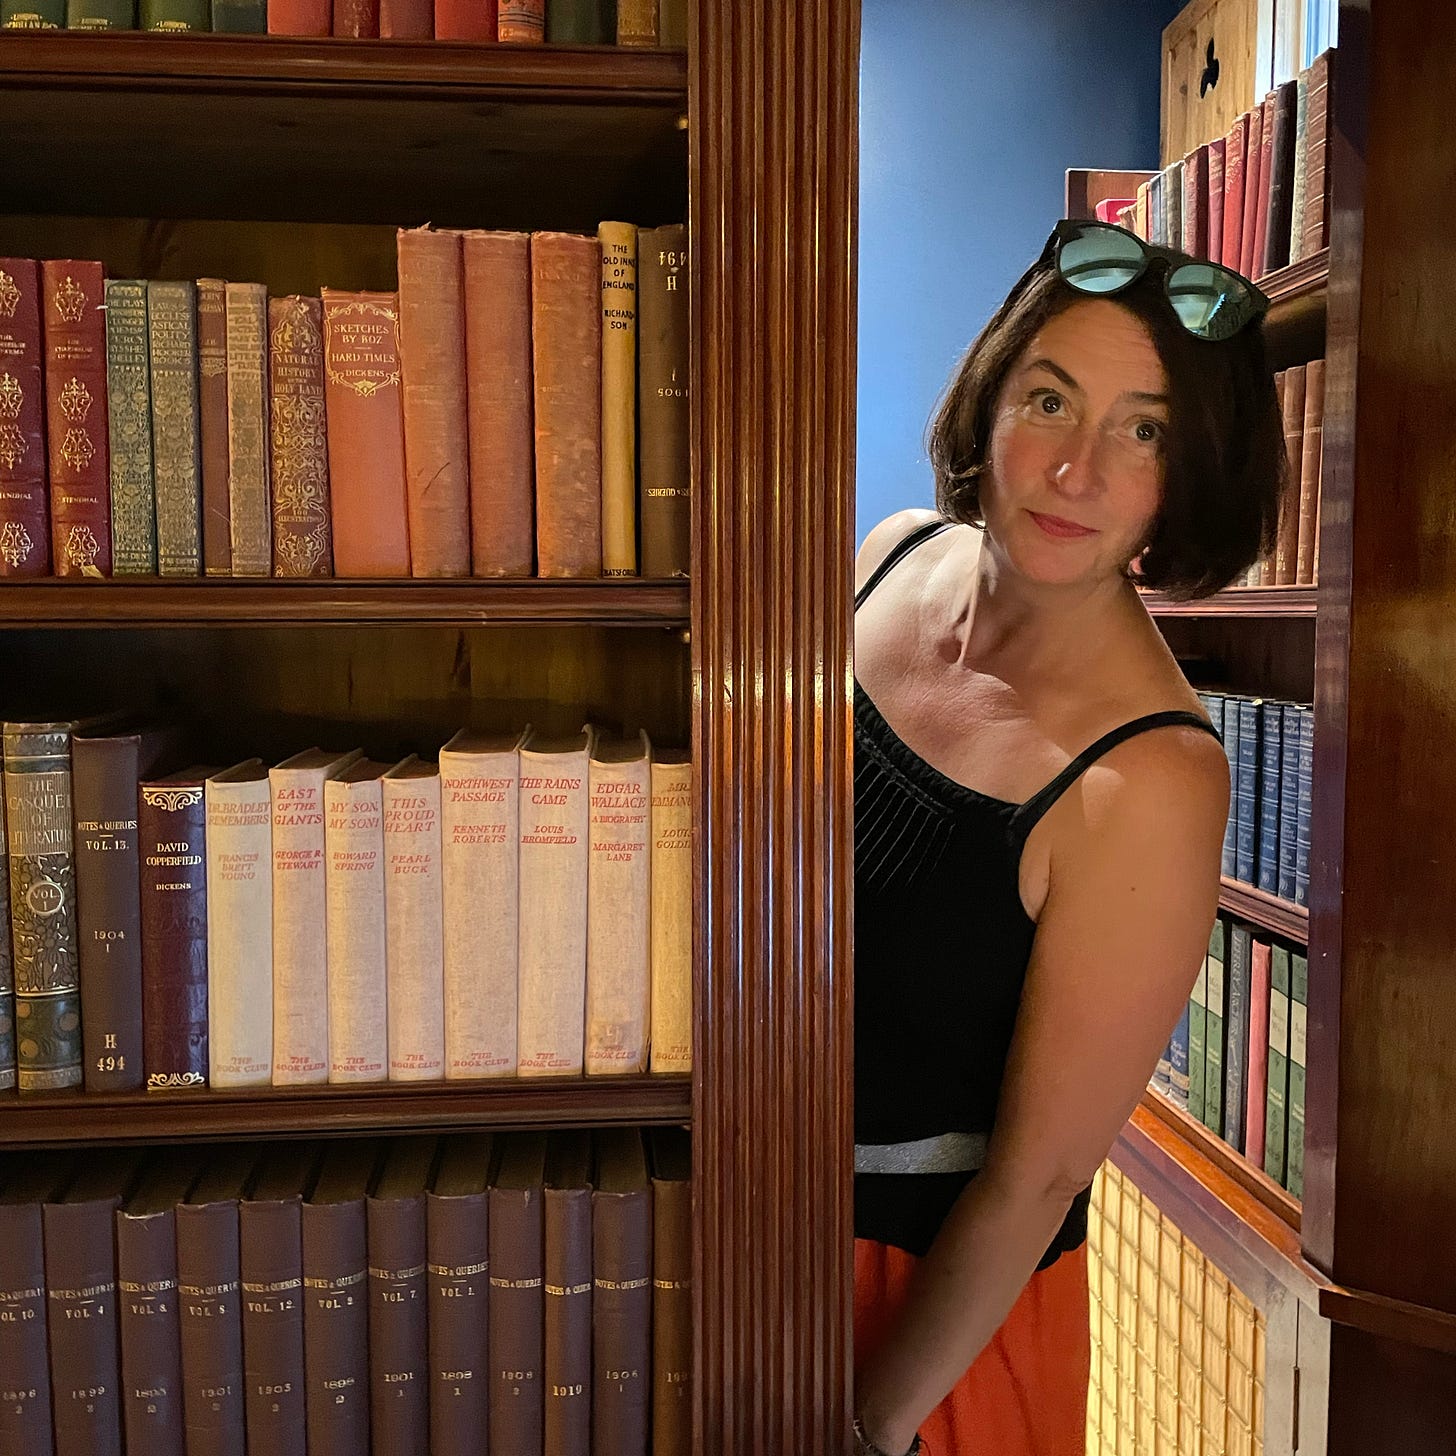 Sarah Farley peeks her head around a book shelf with lots of old hardback books on it